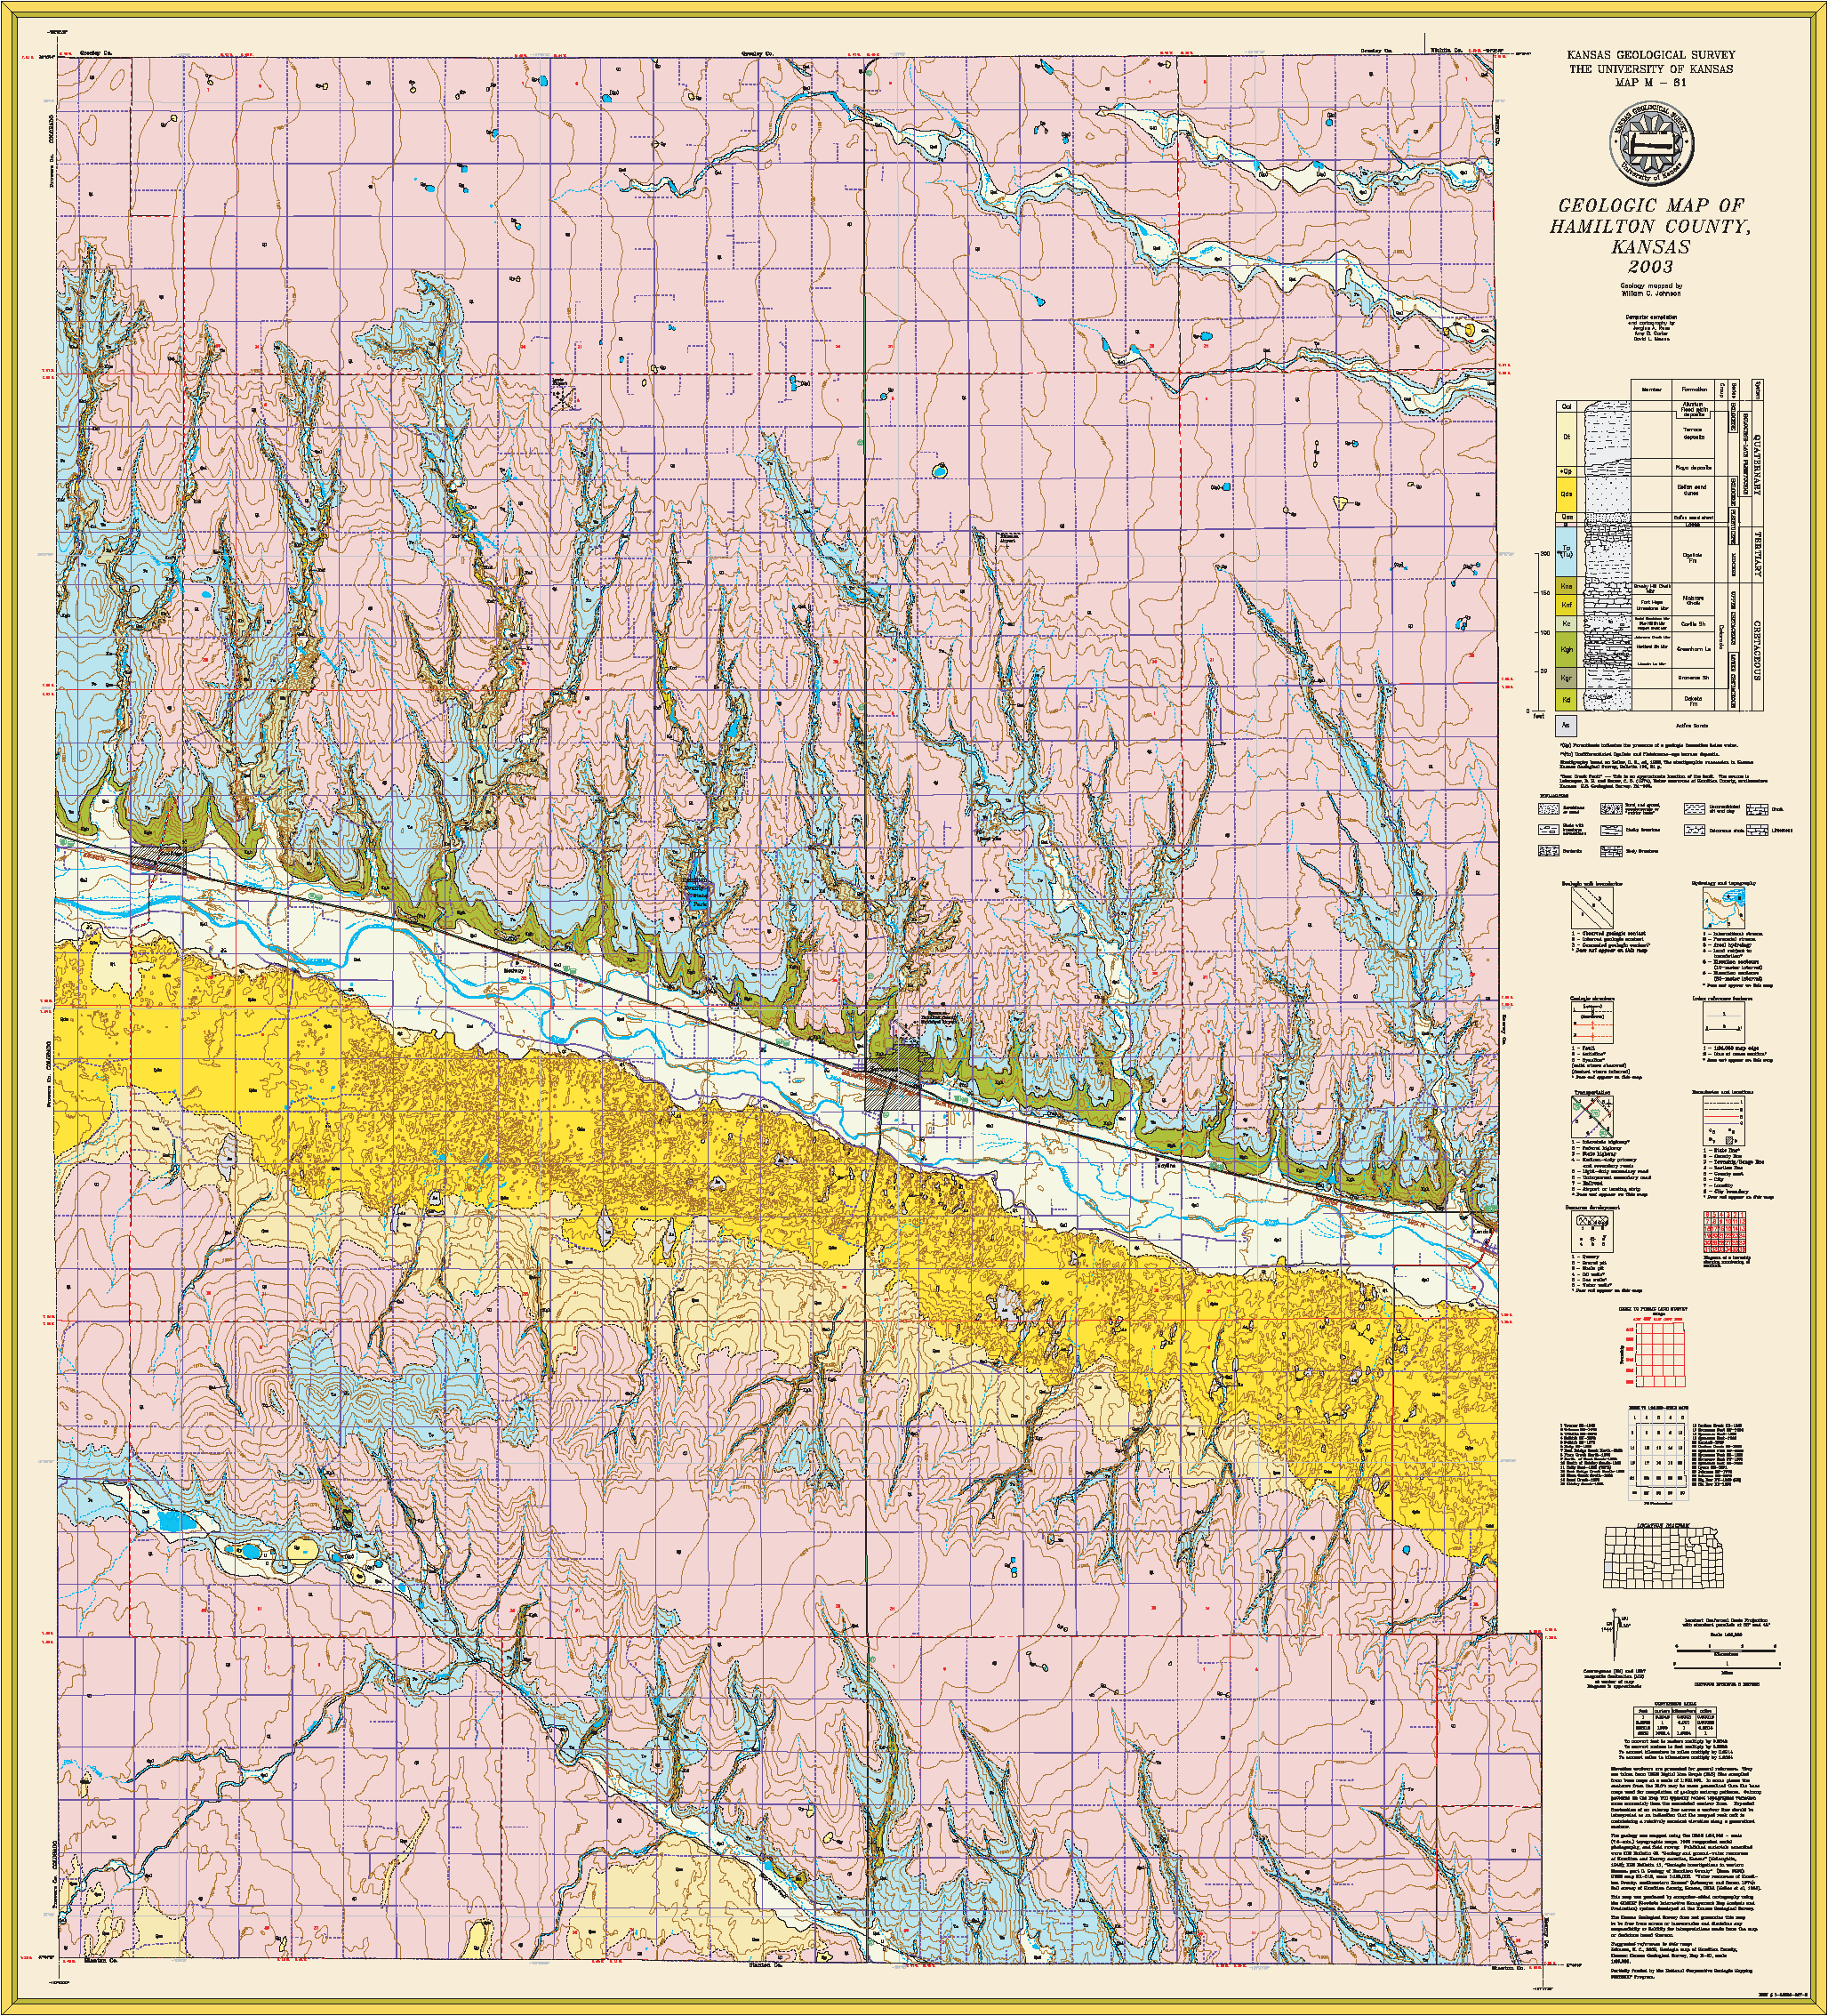 Hamilton county geologic map